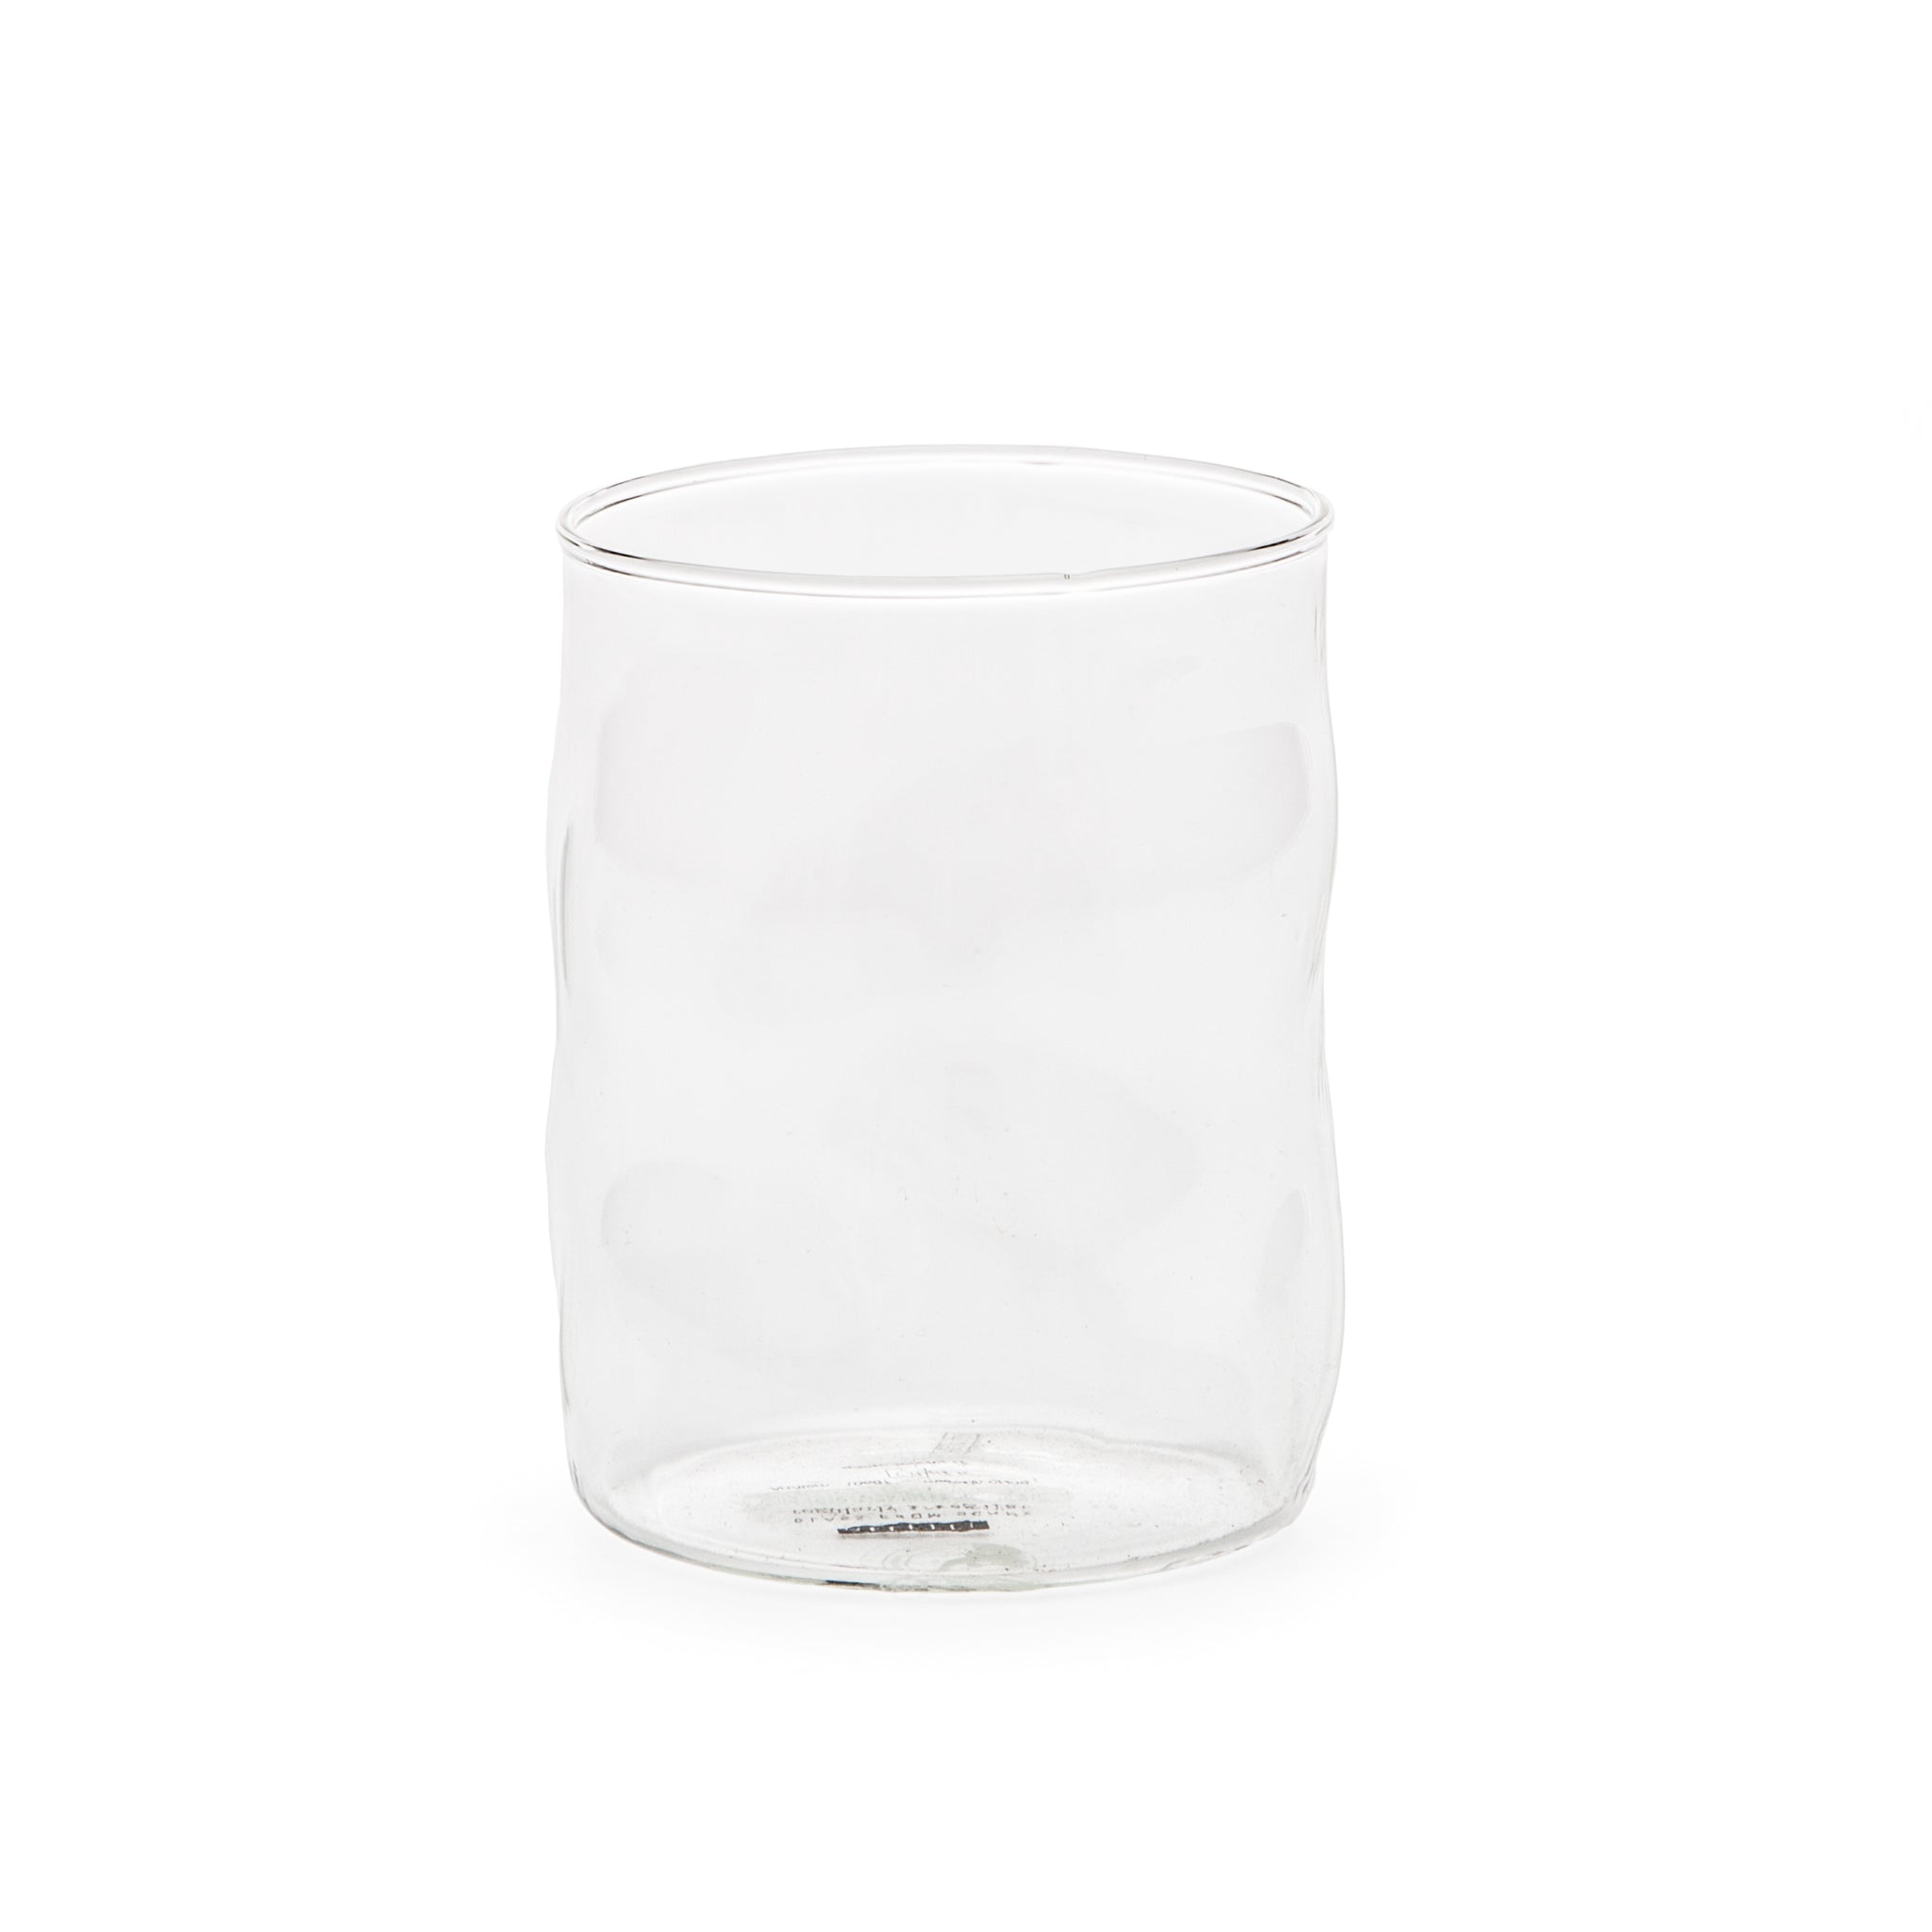 Glass from Sonny Trinkglas by ermellino